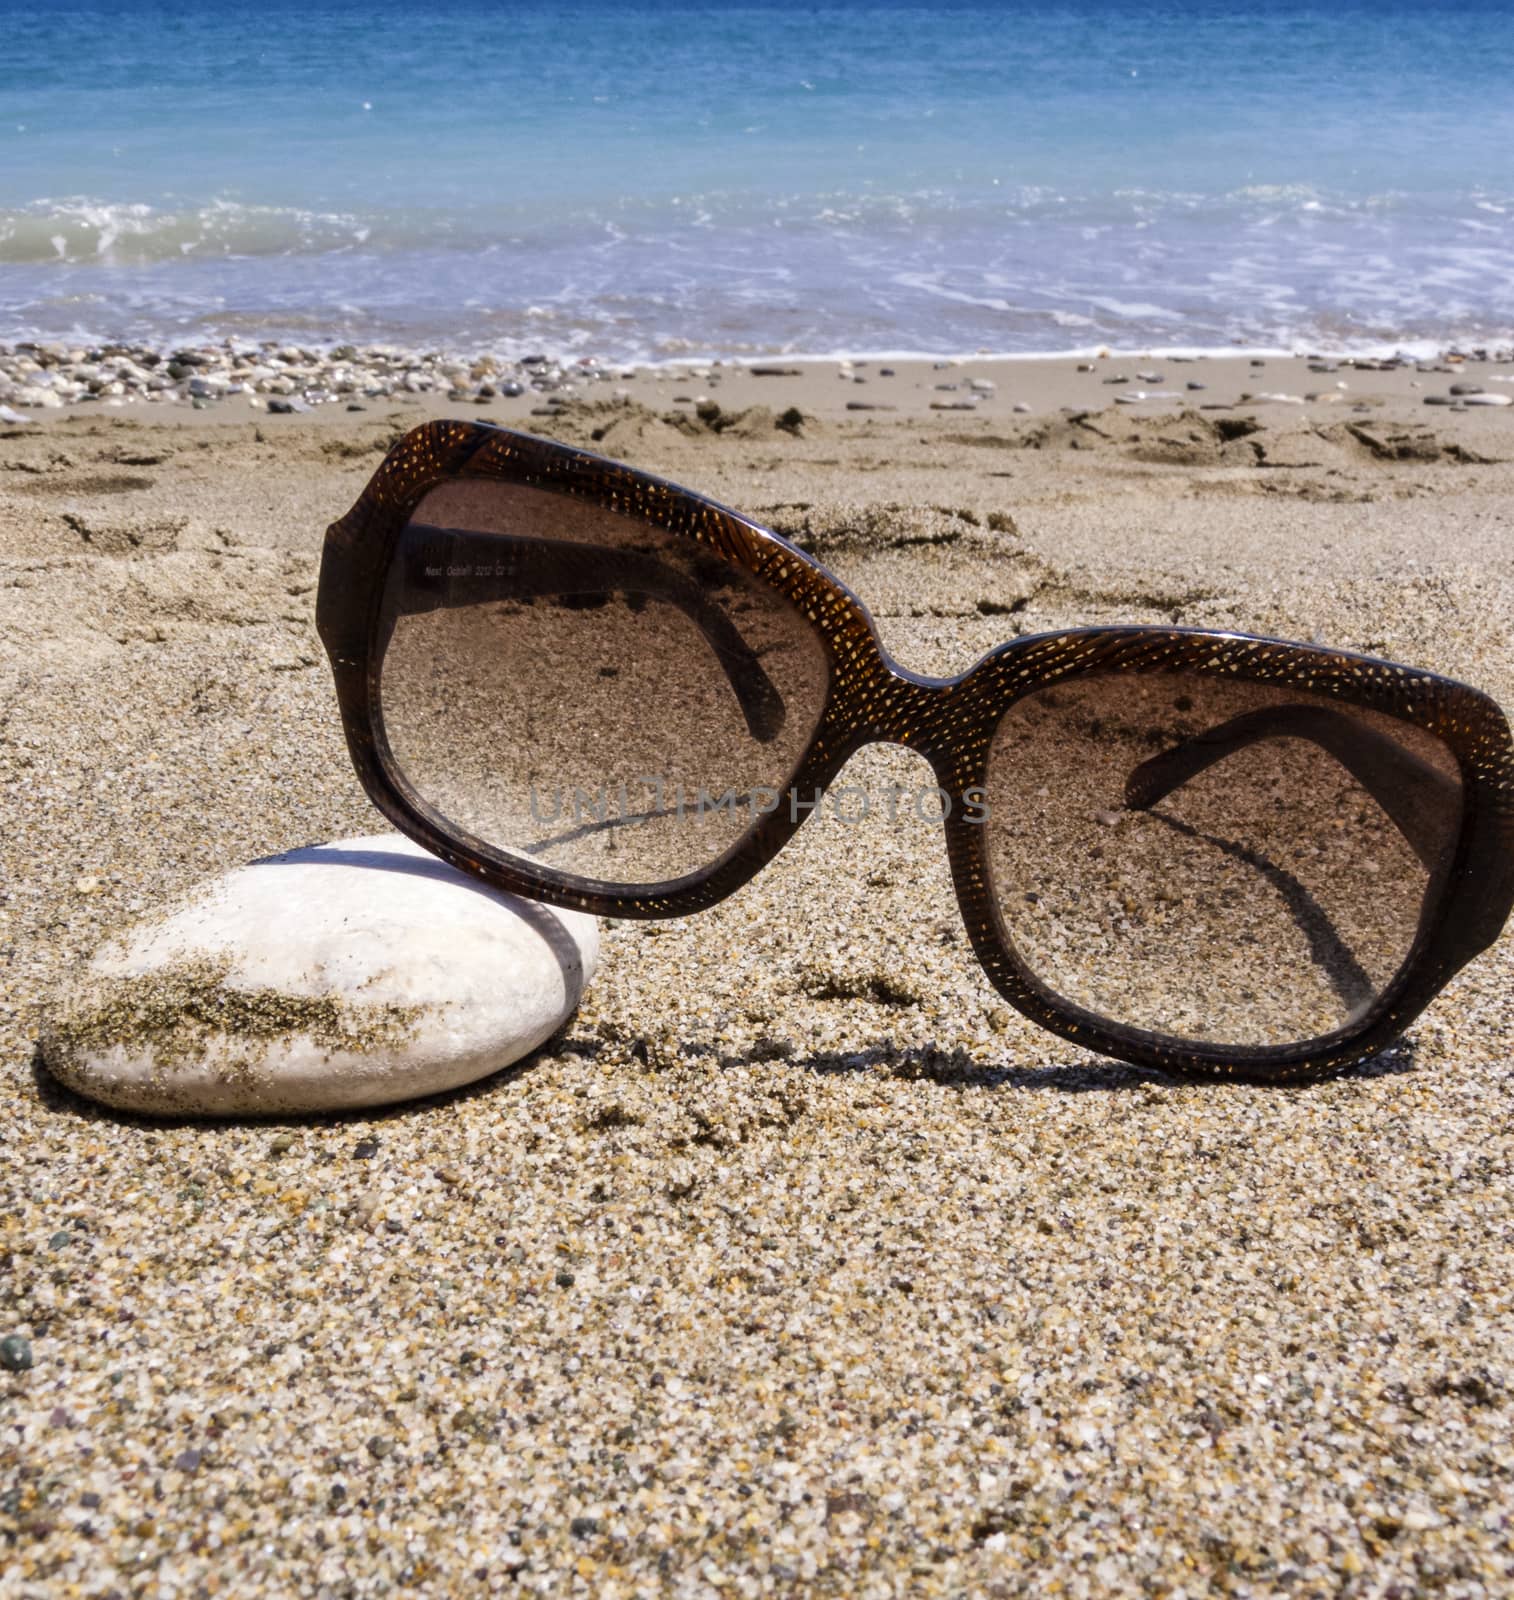 Sunglasses lying on rocky beach. Sunglasses on the beach.